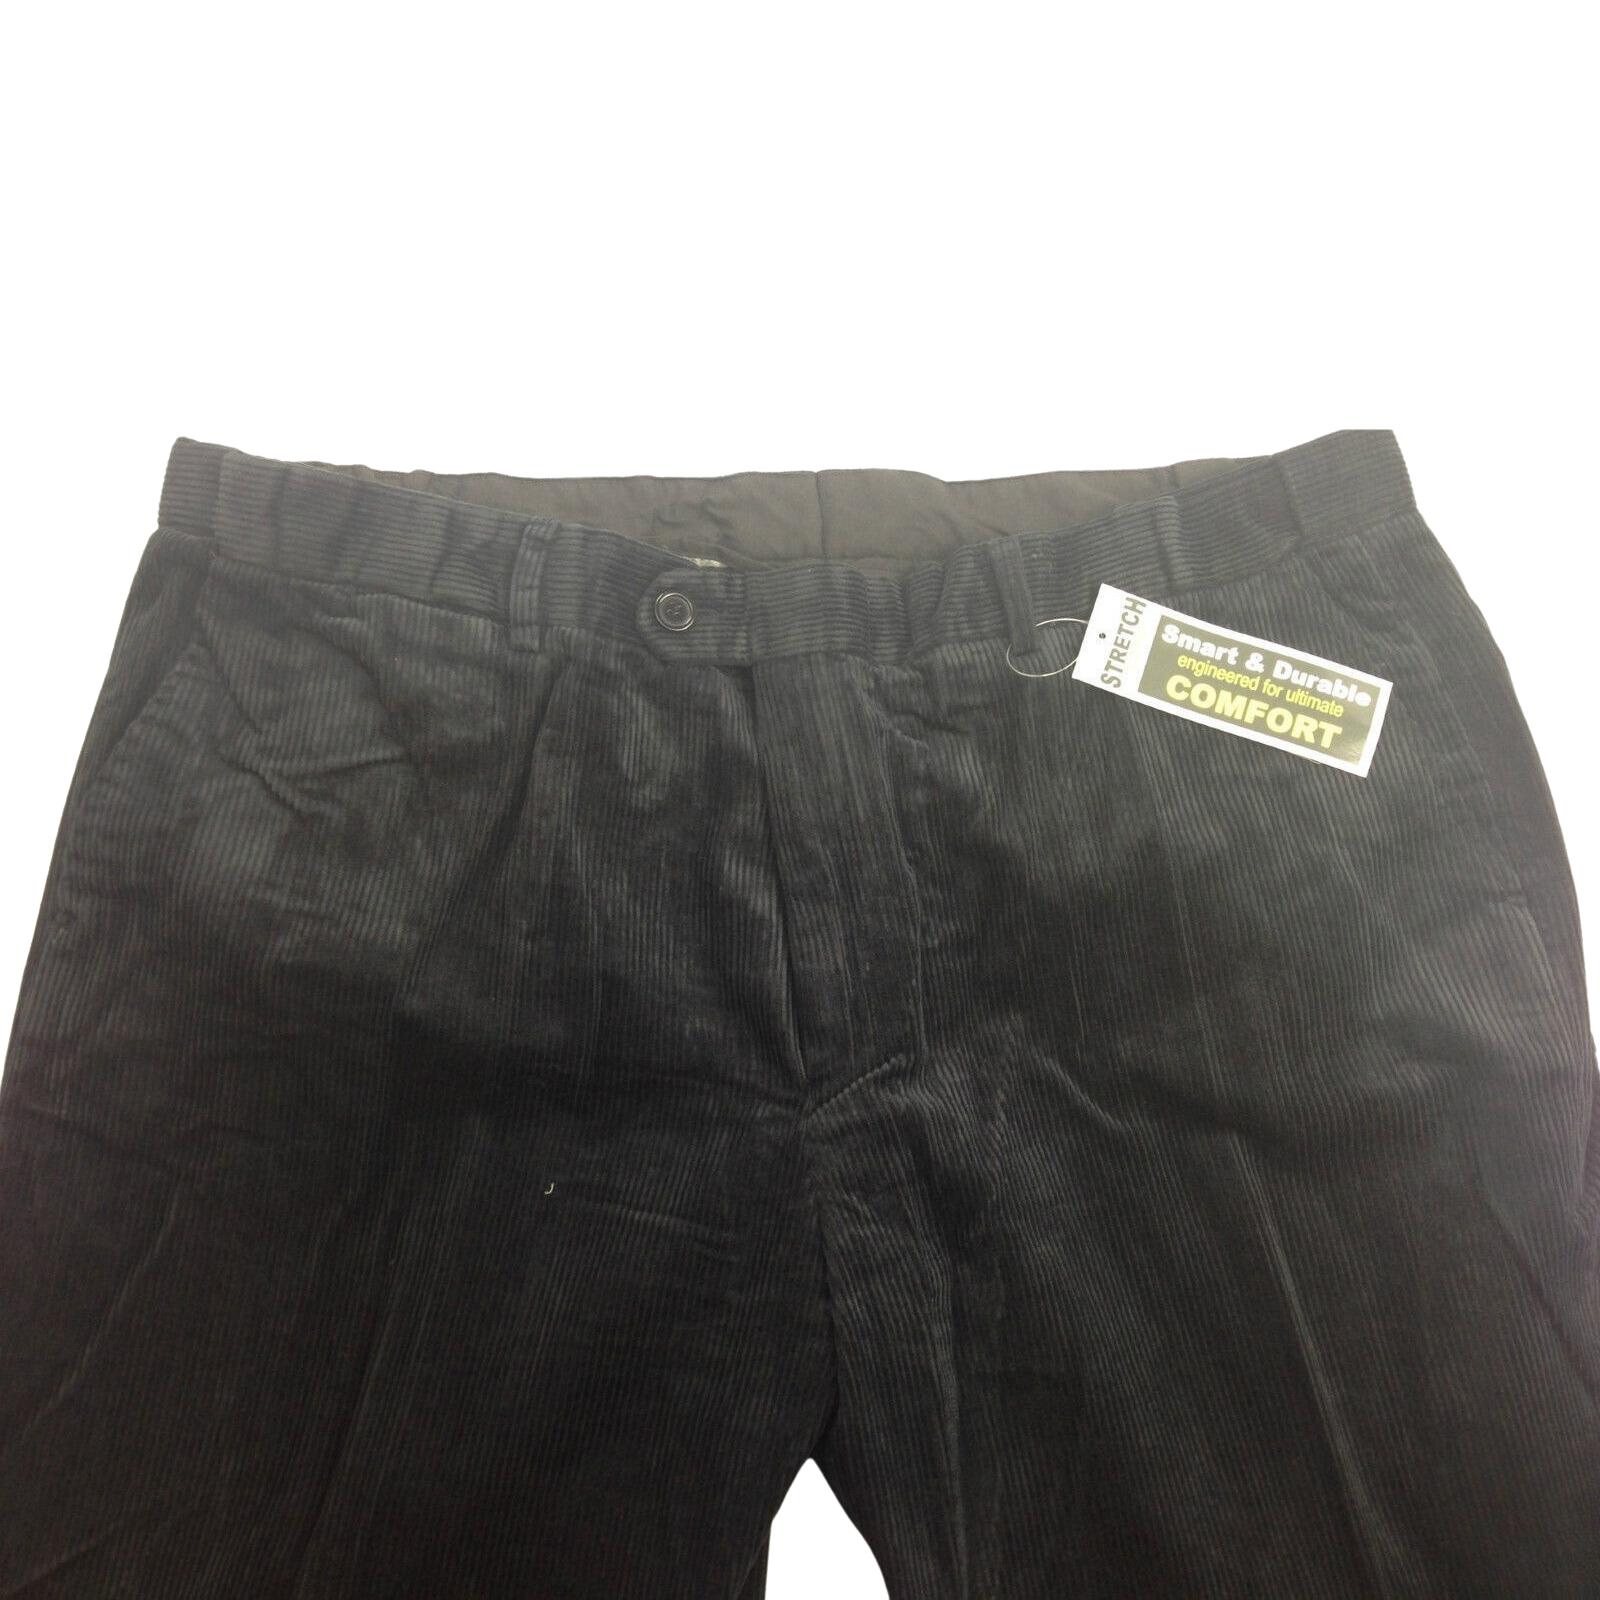 MENS CORDUROY PANTS Trousers Cords Casual STRETCH COTTON Size 32-44  Adjustable